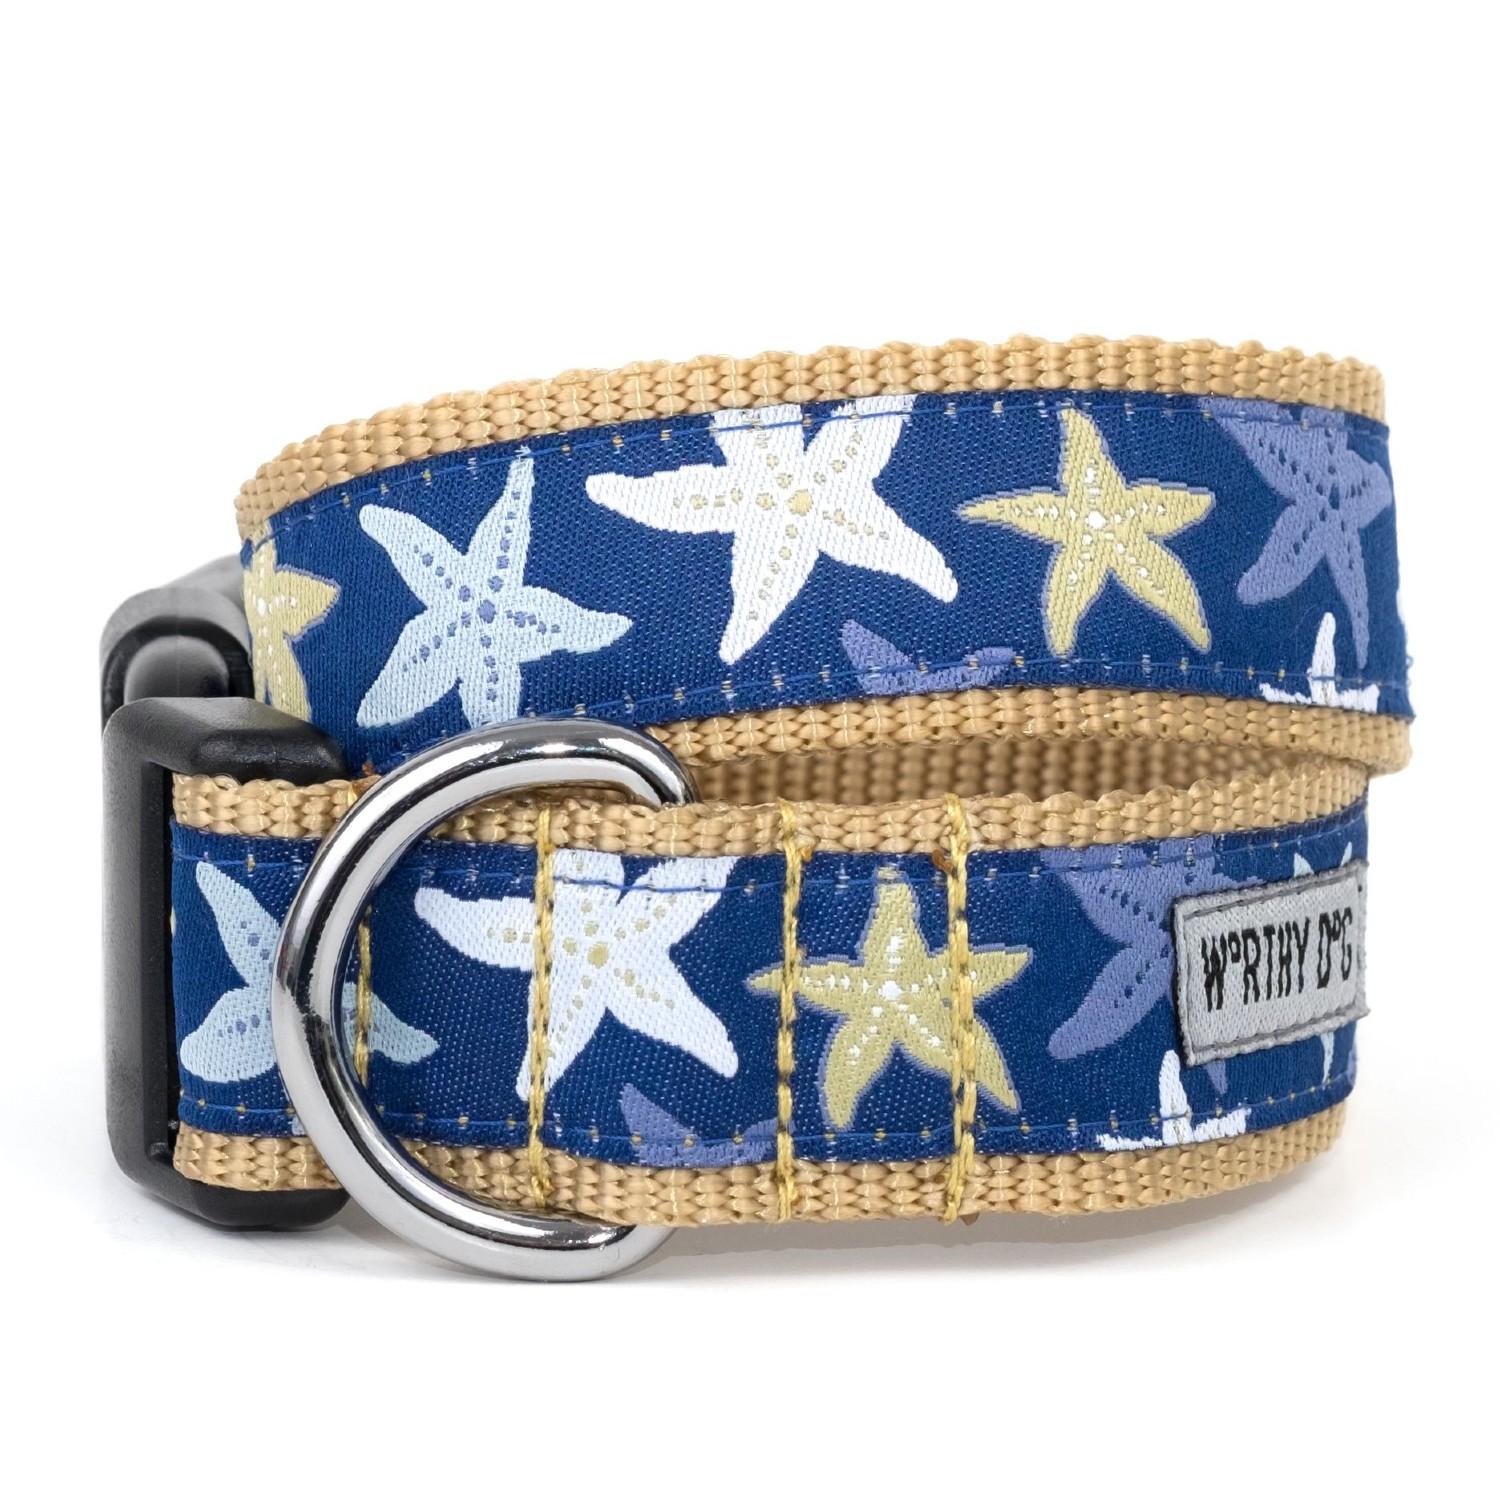 Worthy Dog Starfish Dog Collar